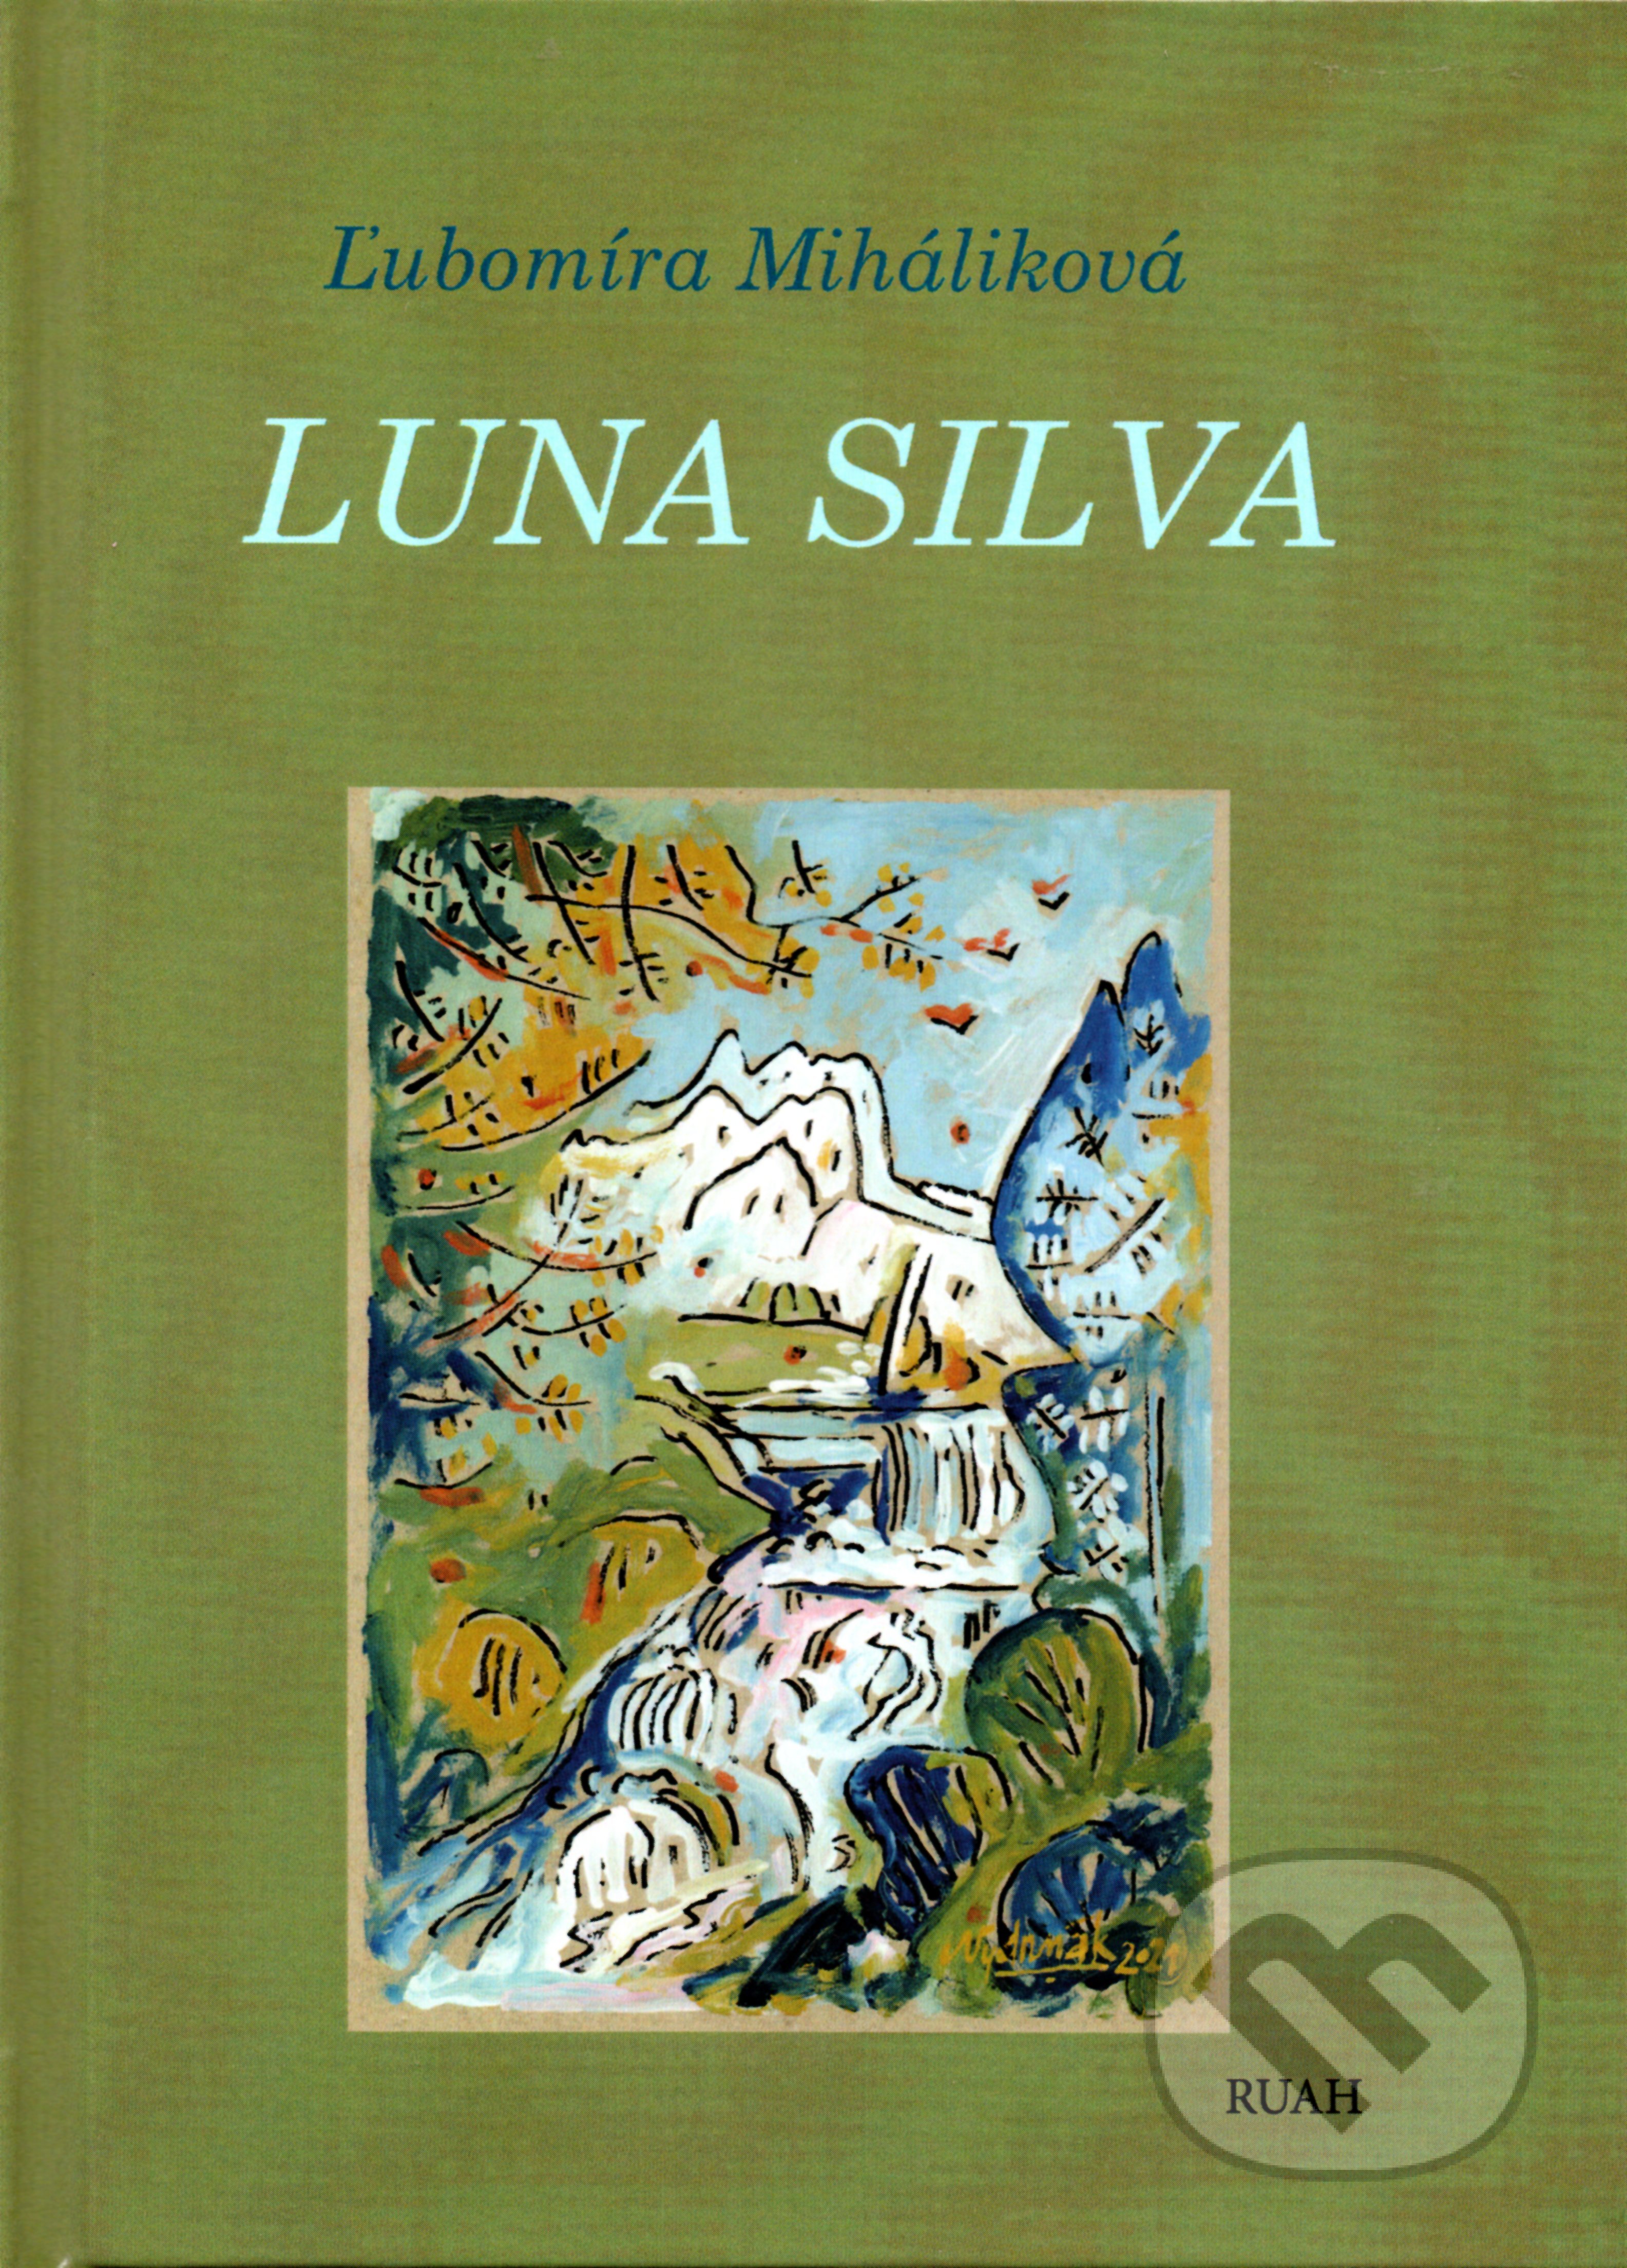 Luna silva - Ľubomíra Miháliková, Jozef Vydrnák (Ilustrátor), RUAH, 2021